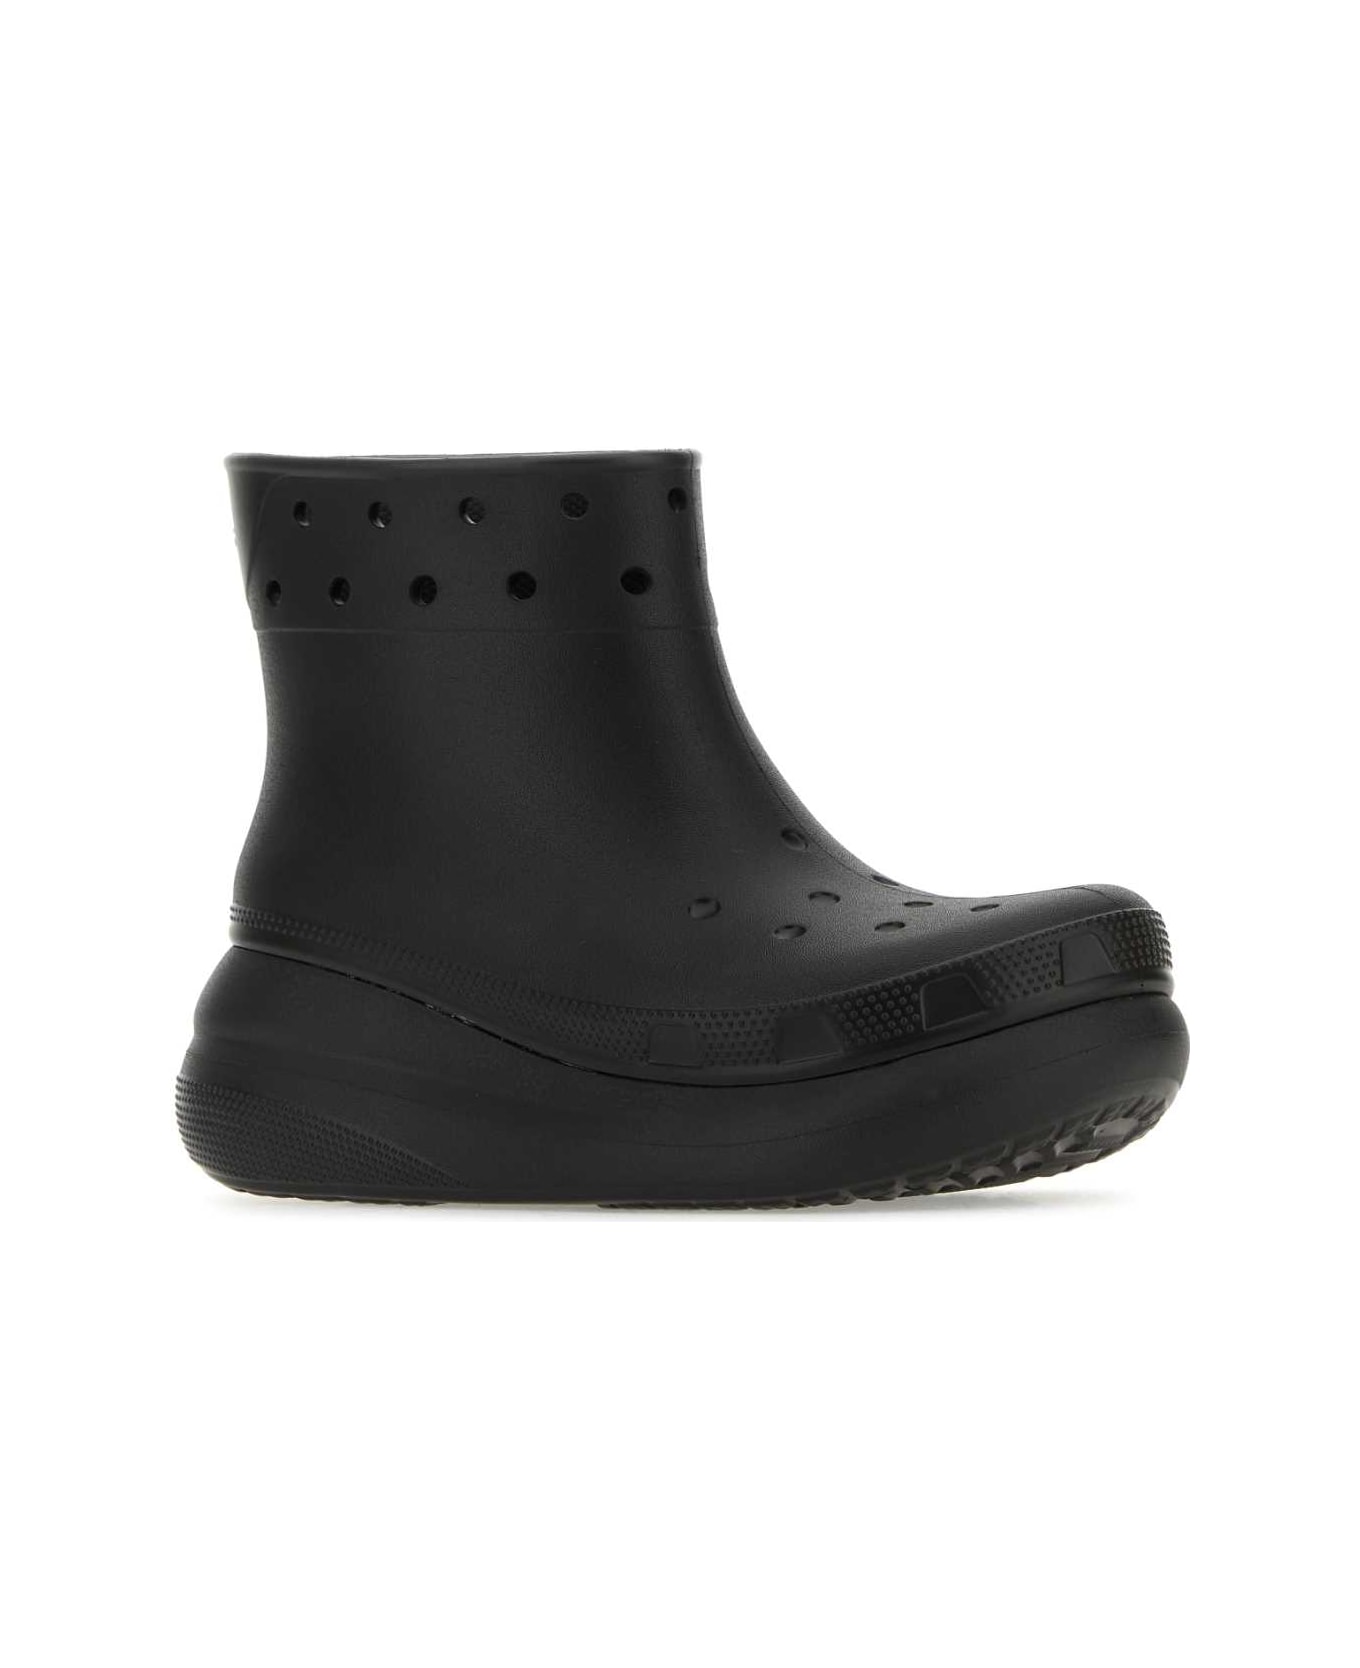 Crocs Black Crosliteâ ¢ Classic Crush Ankle Boots - BLACK